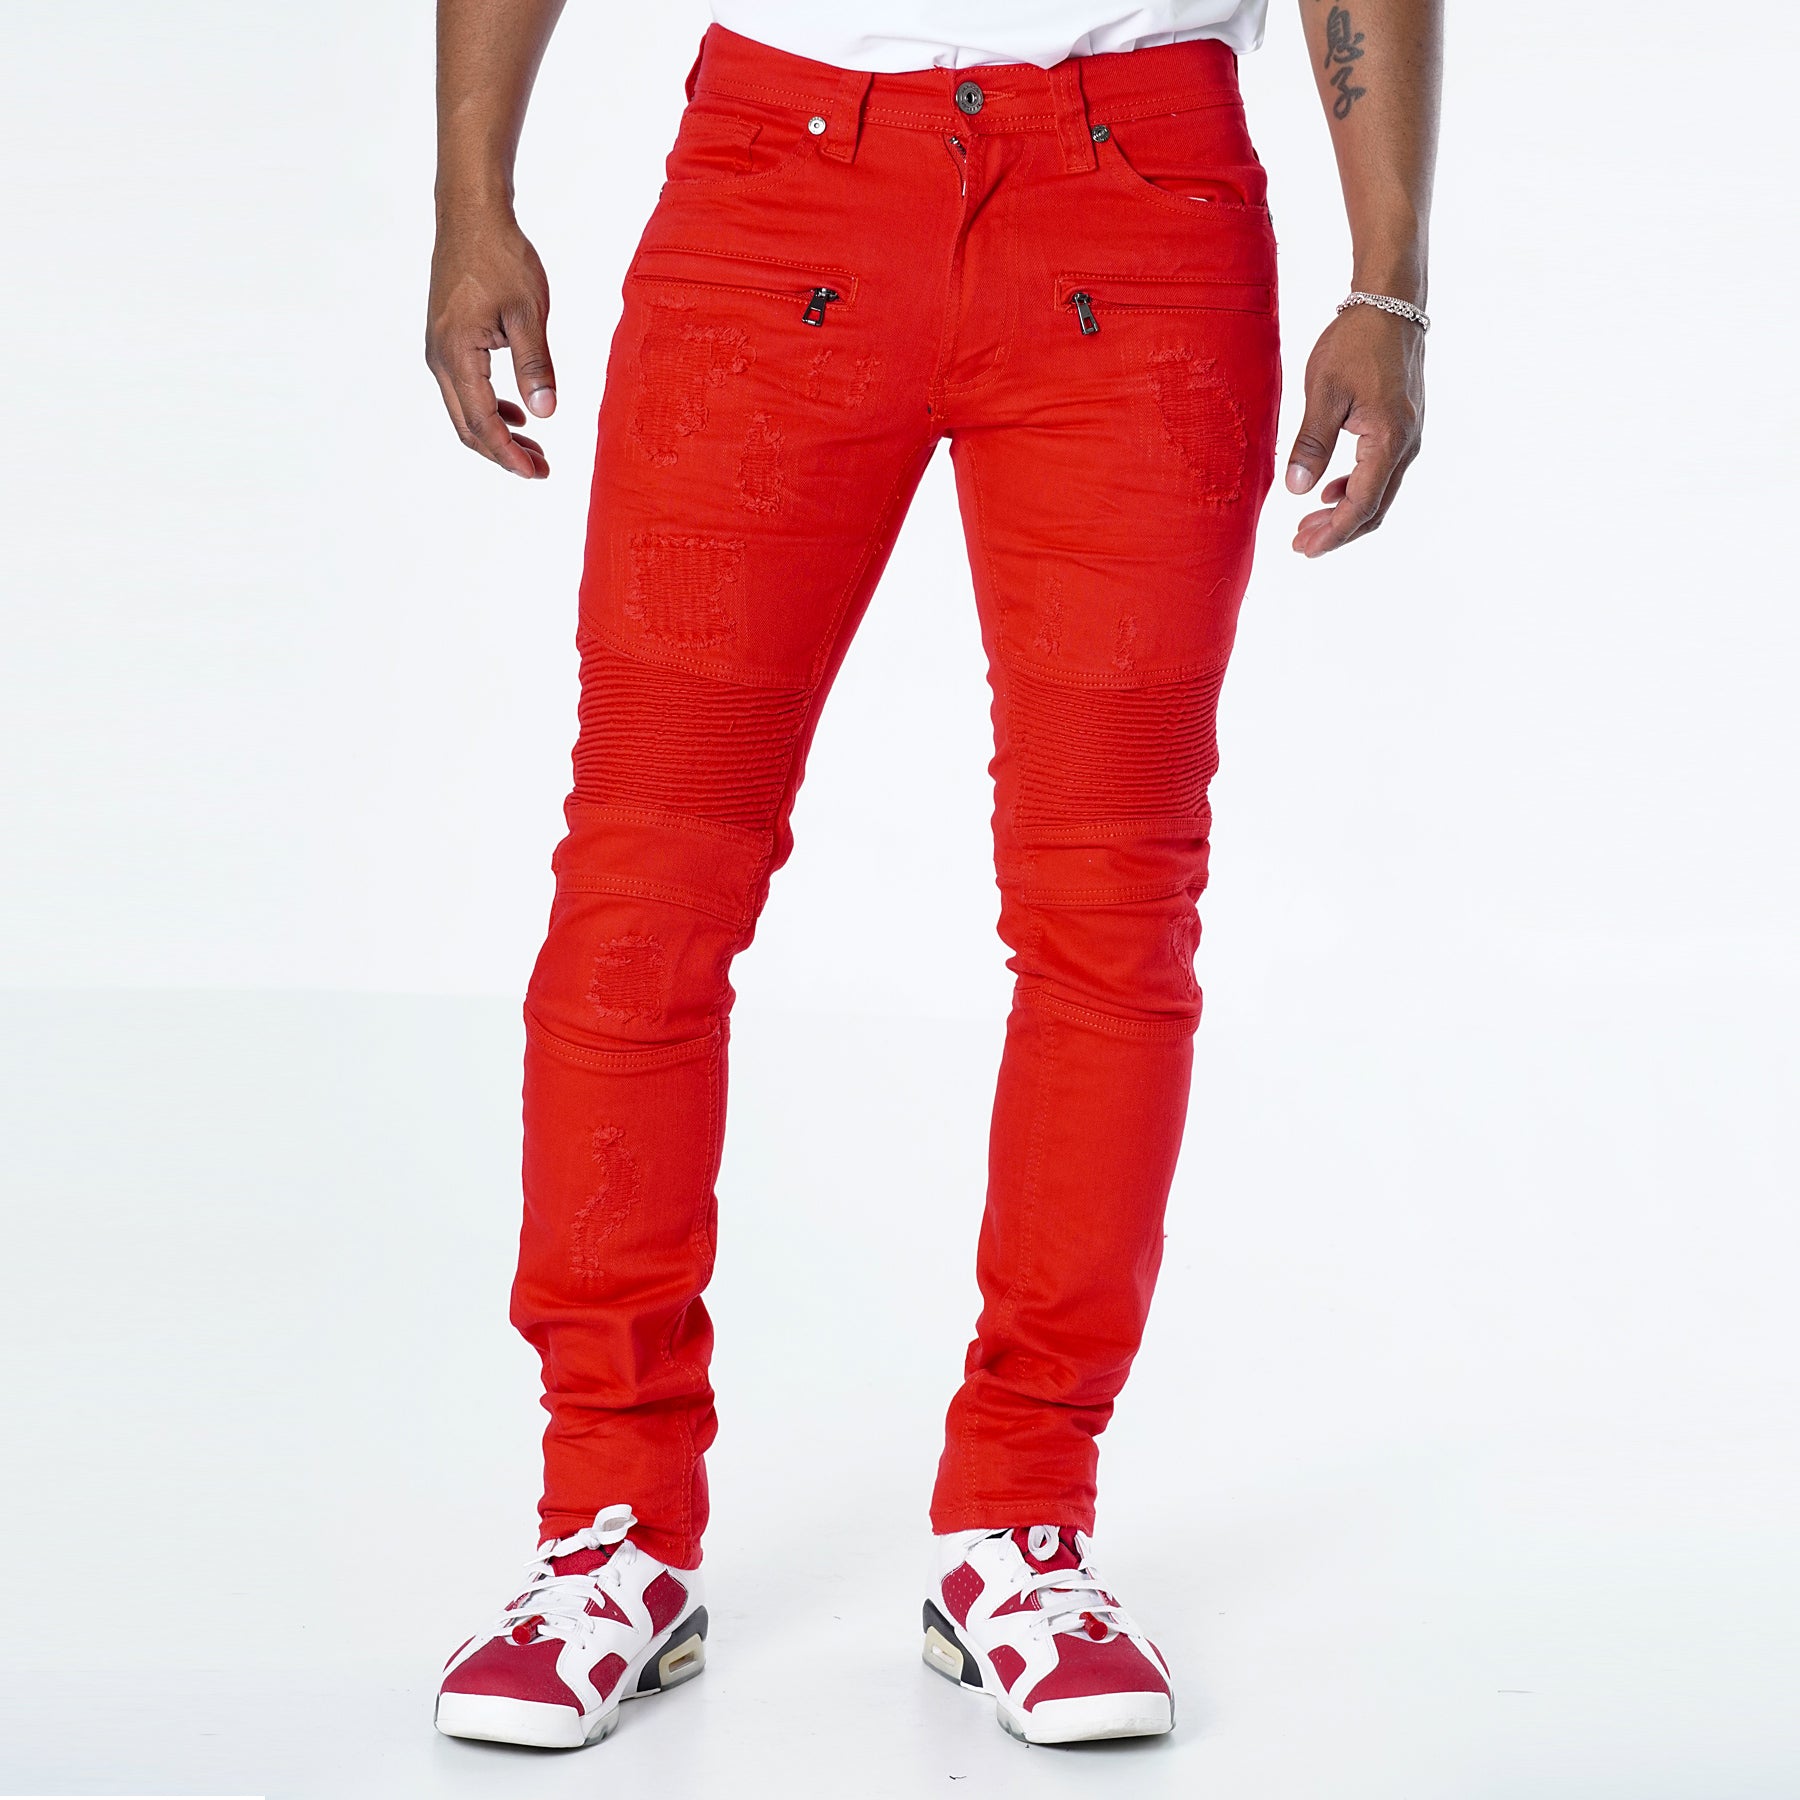 M1786 Makobi Prado Biker Jeans pẹlu Rip & Tunṣe - Red